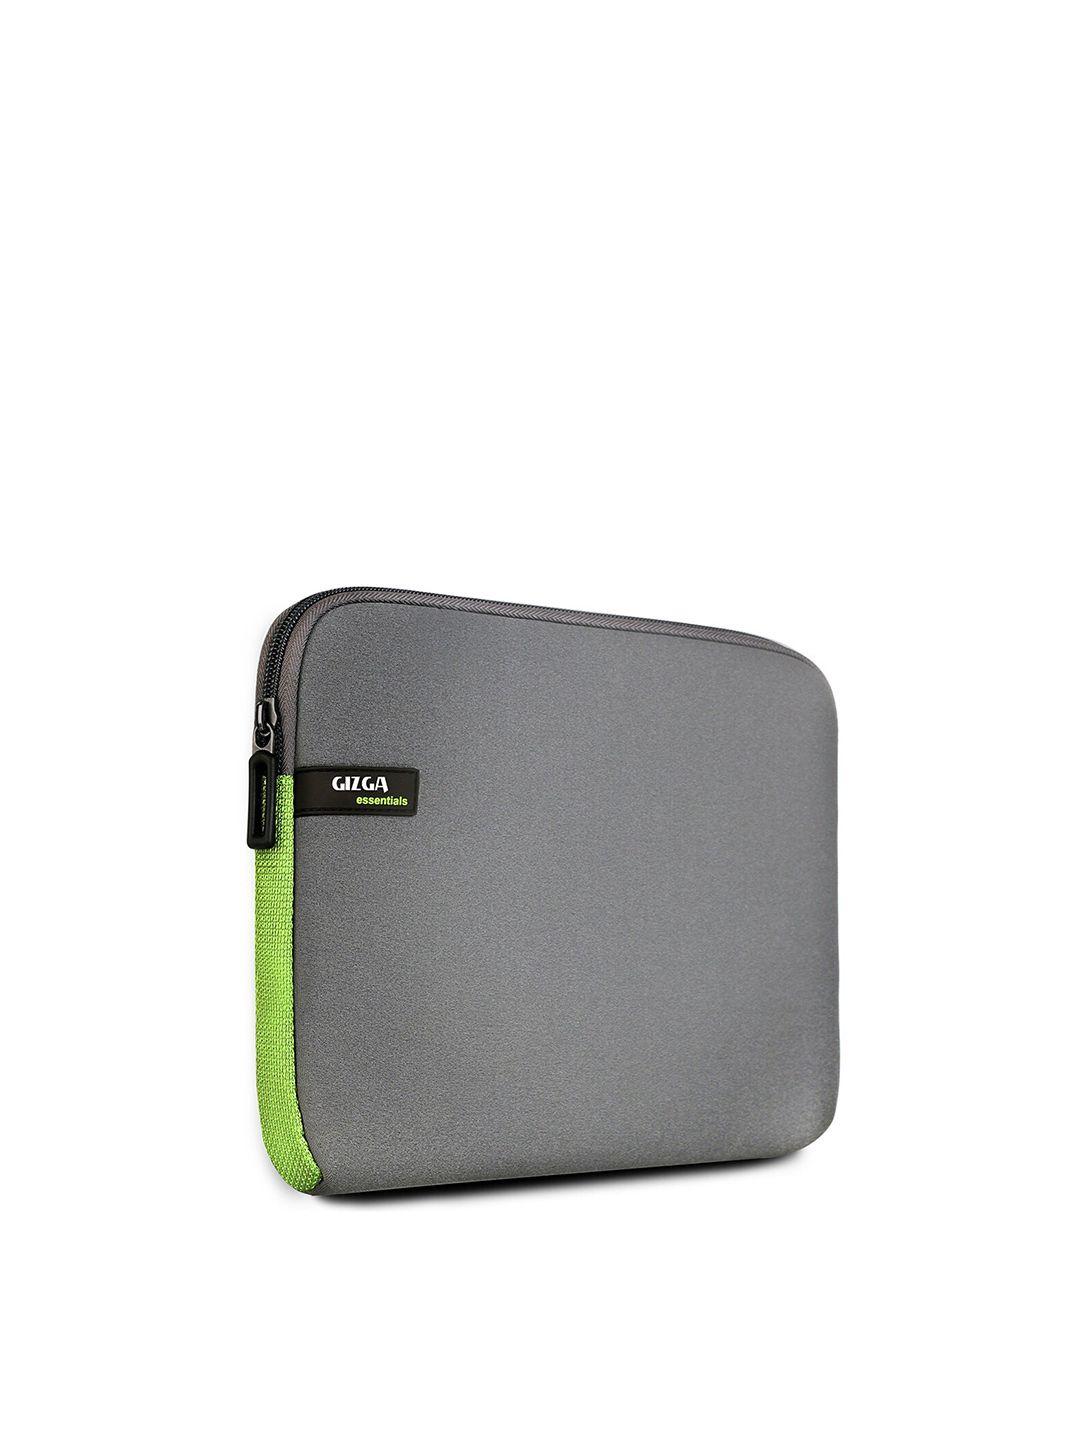 gizga essentials soft inner lining 14.1 inch laptop sleeve